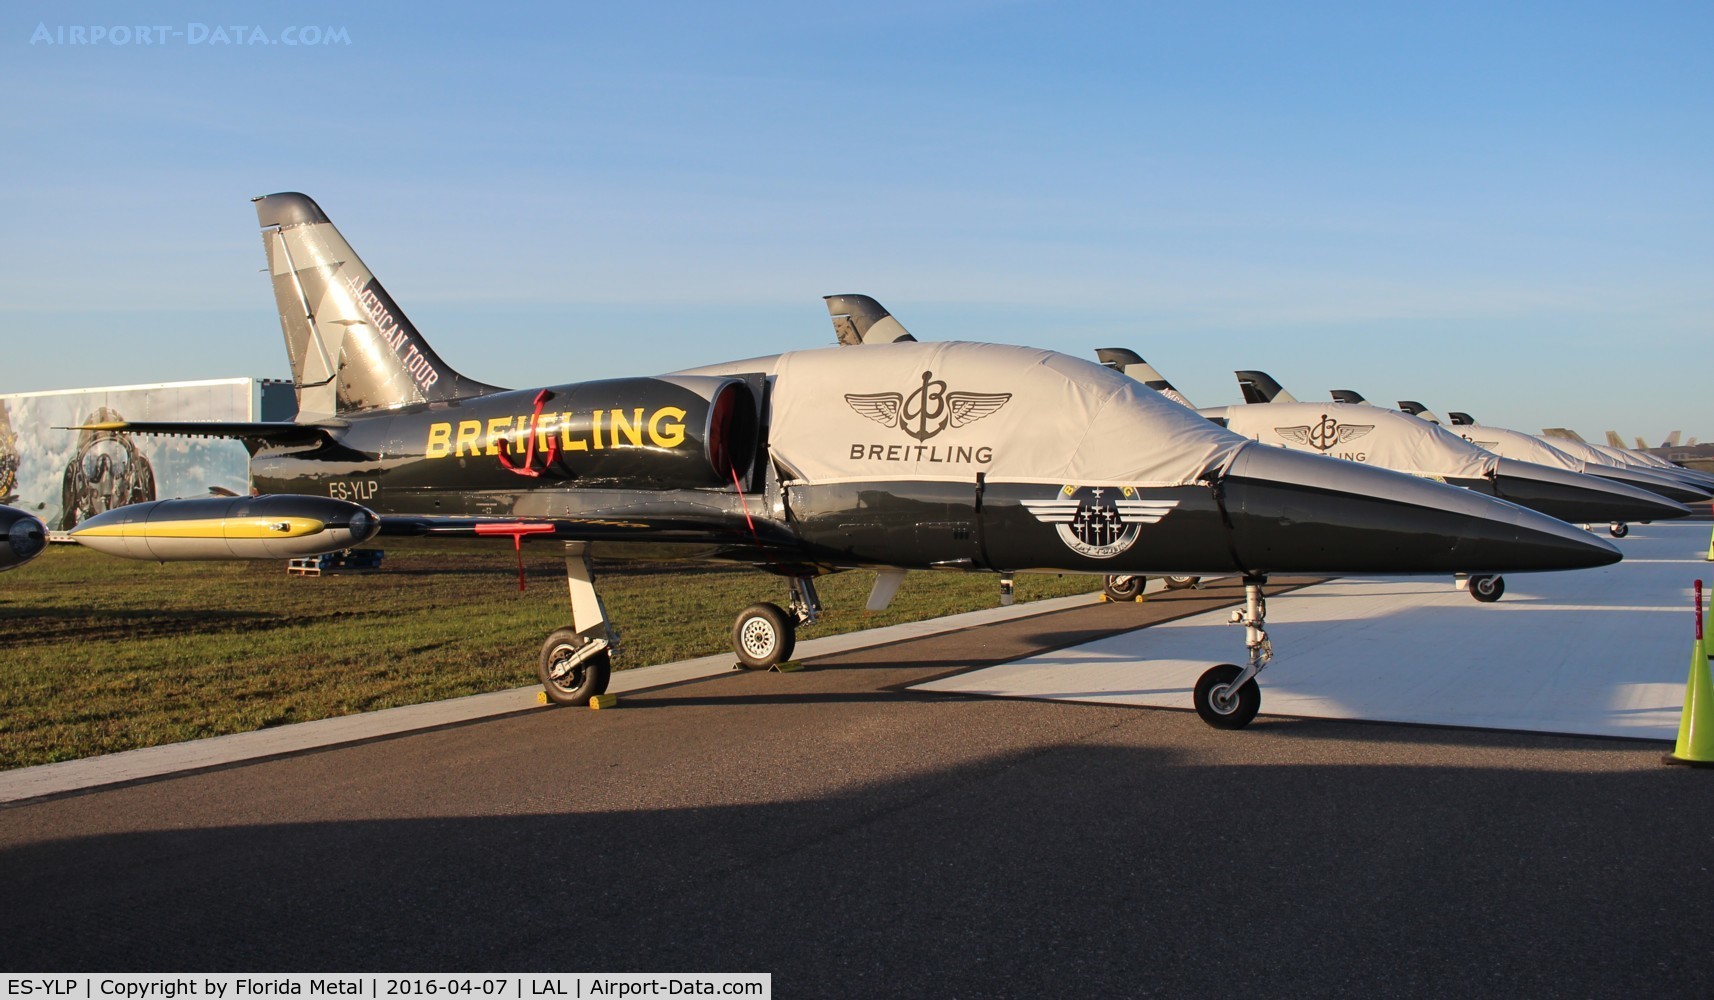 ES-YLP, , Breitling Jet Team